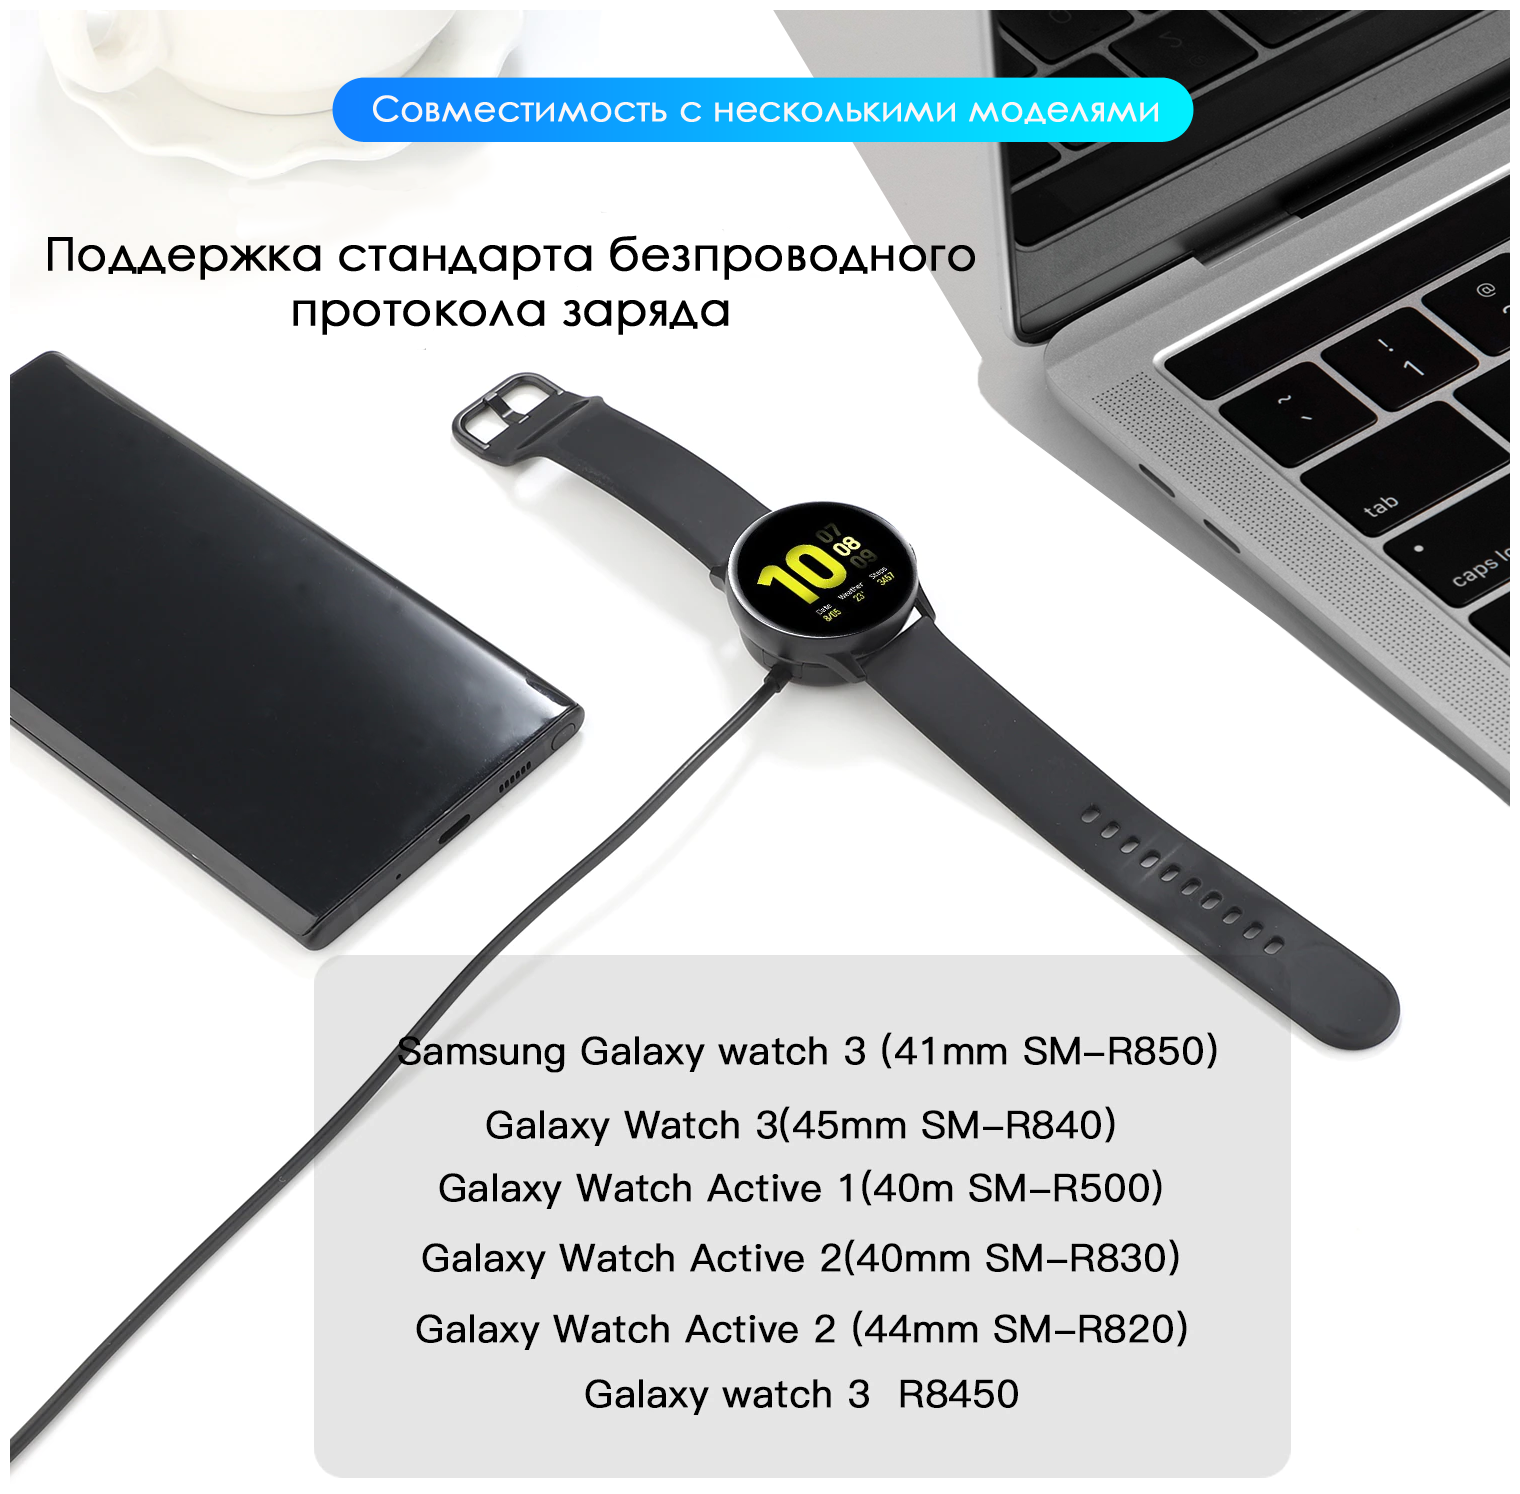 USB зарядное устройство для Samsung Galaxy Watch3 Active 1, 2, SM R820, R830, R500, 40 мм, 44 мм